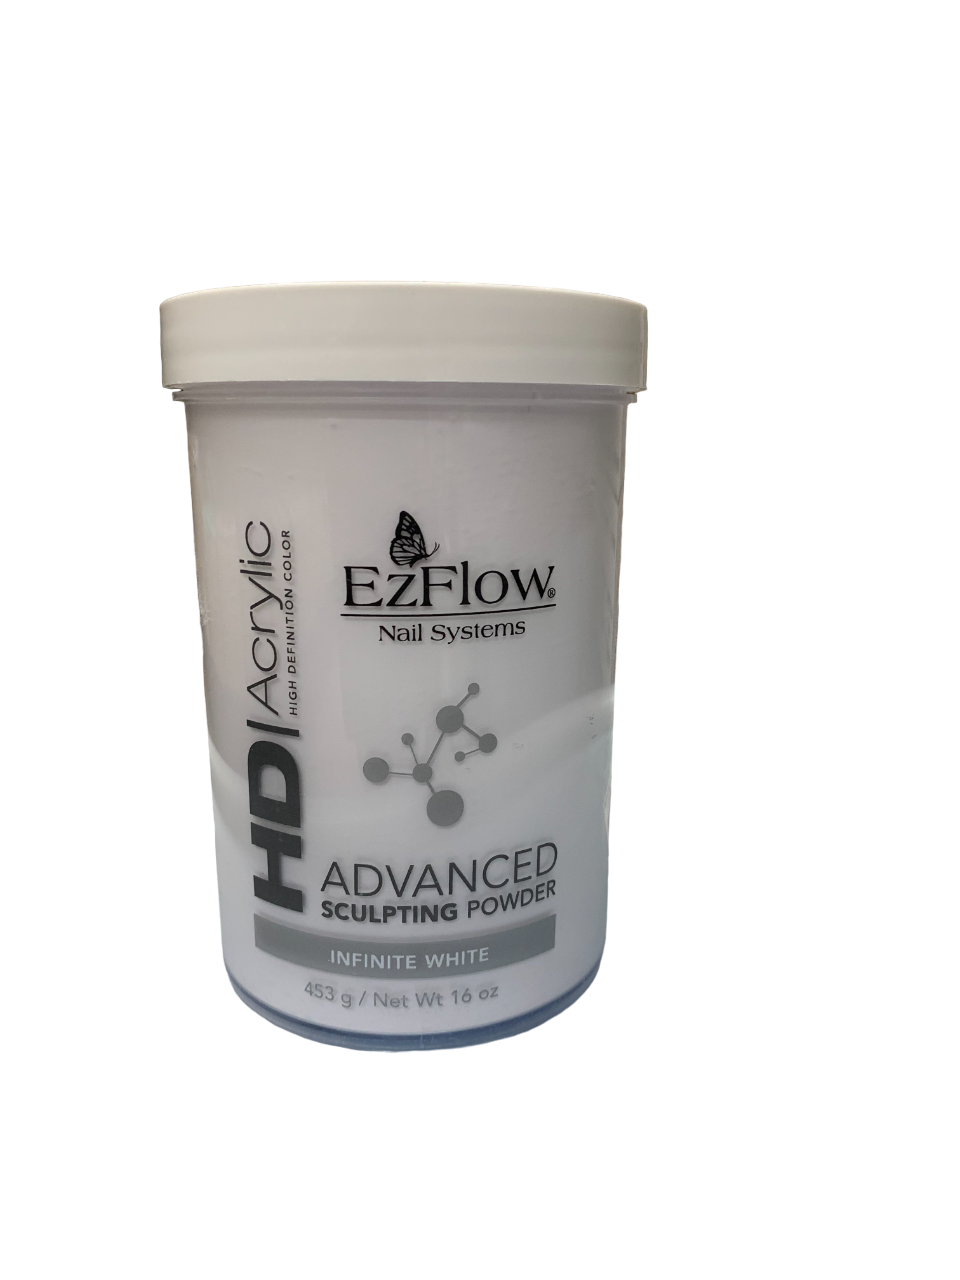 Ezflow HD Advanced Sculpting Powder - EZFIW - Infinite White